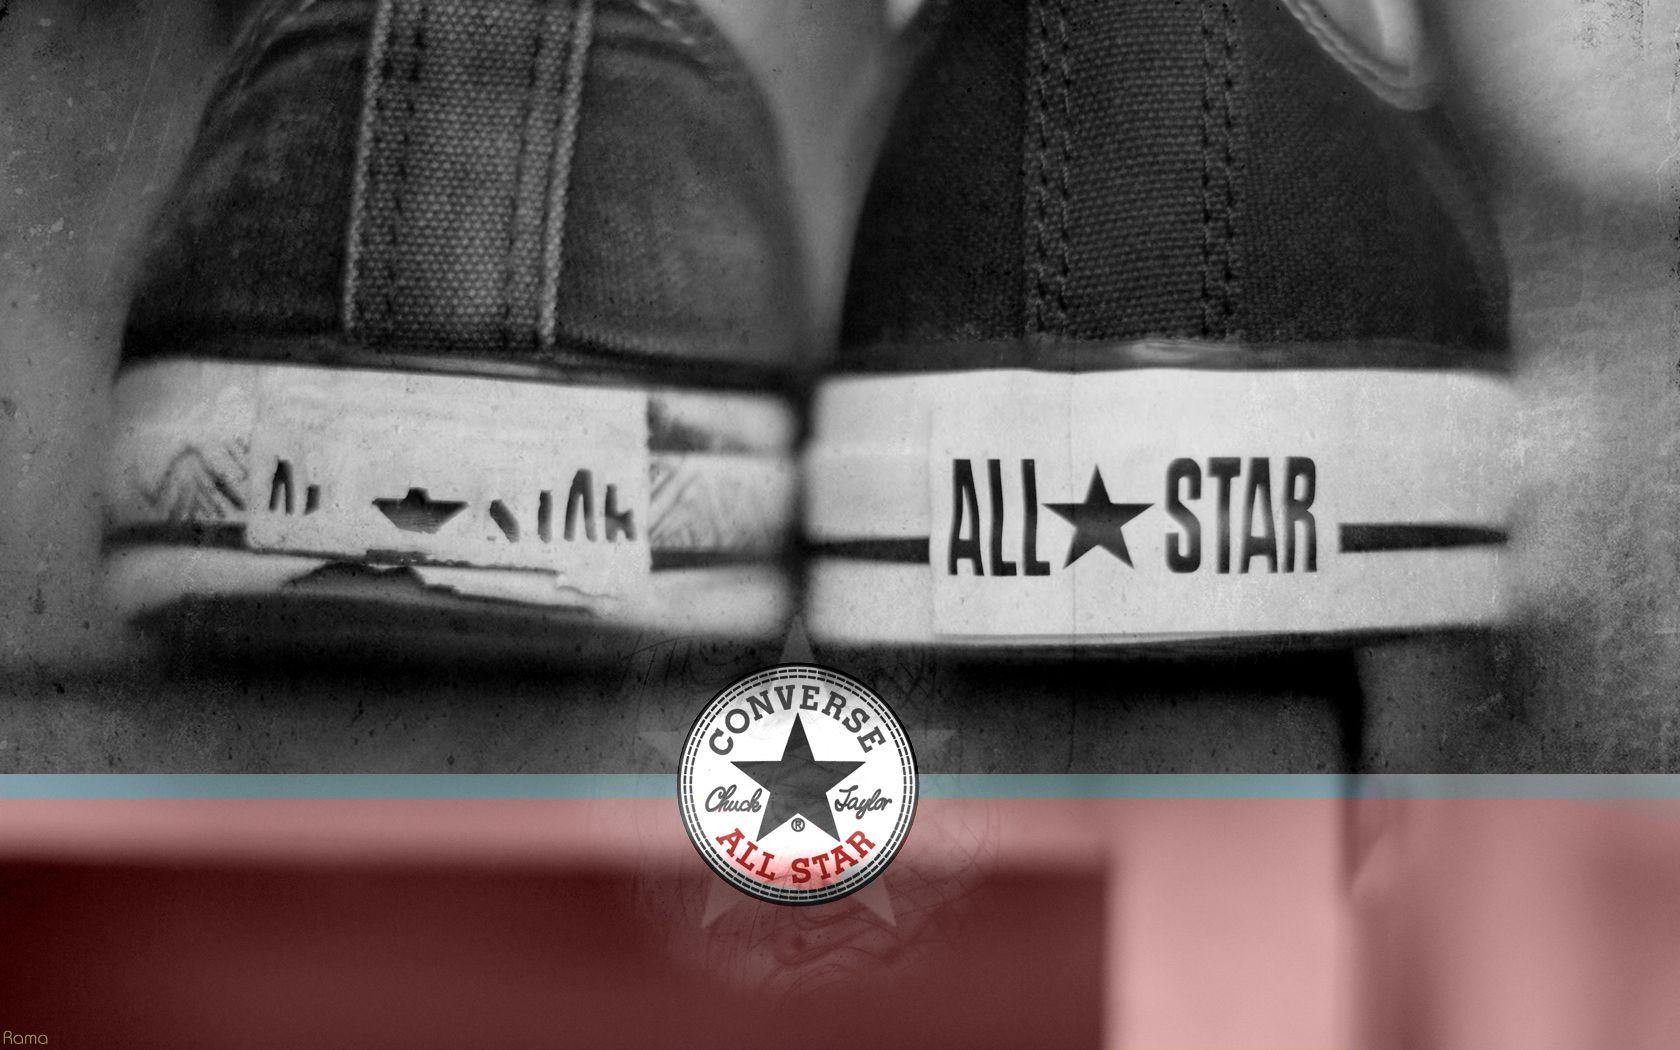 Converse All Star Logos Wallpaper HD. I HD Image